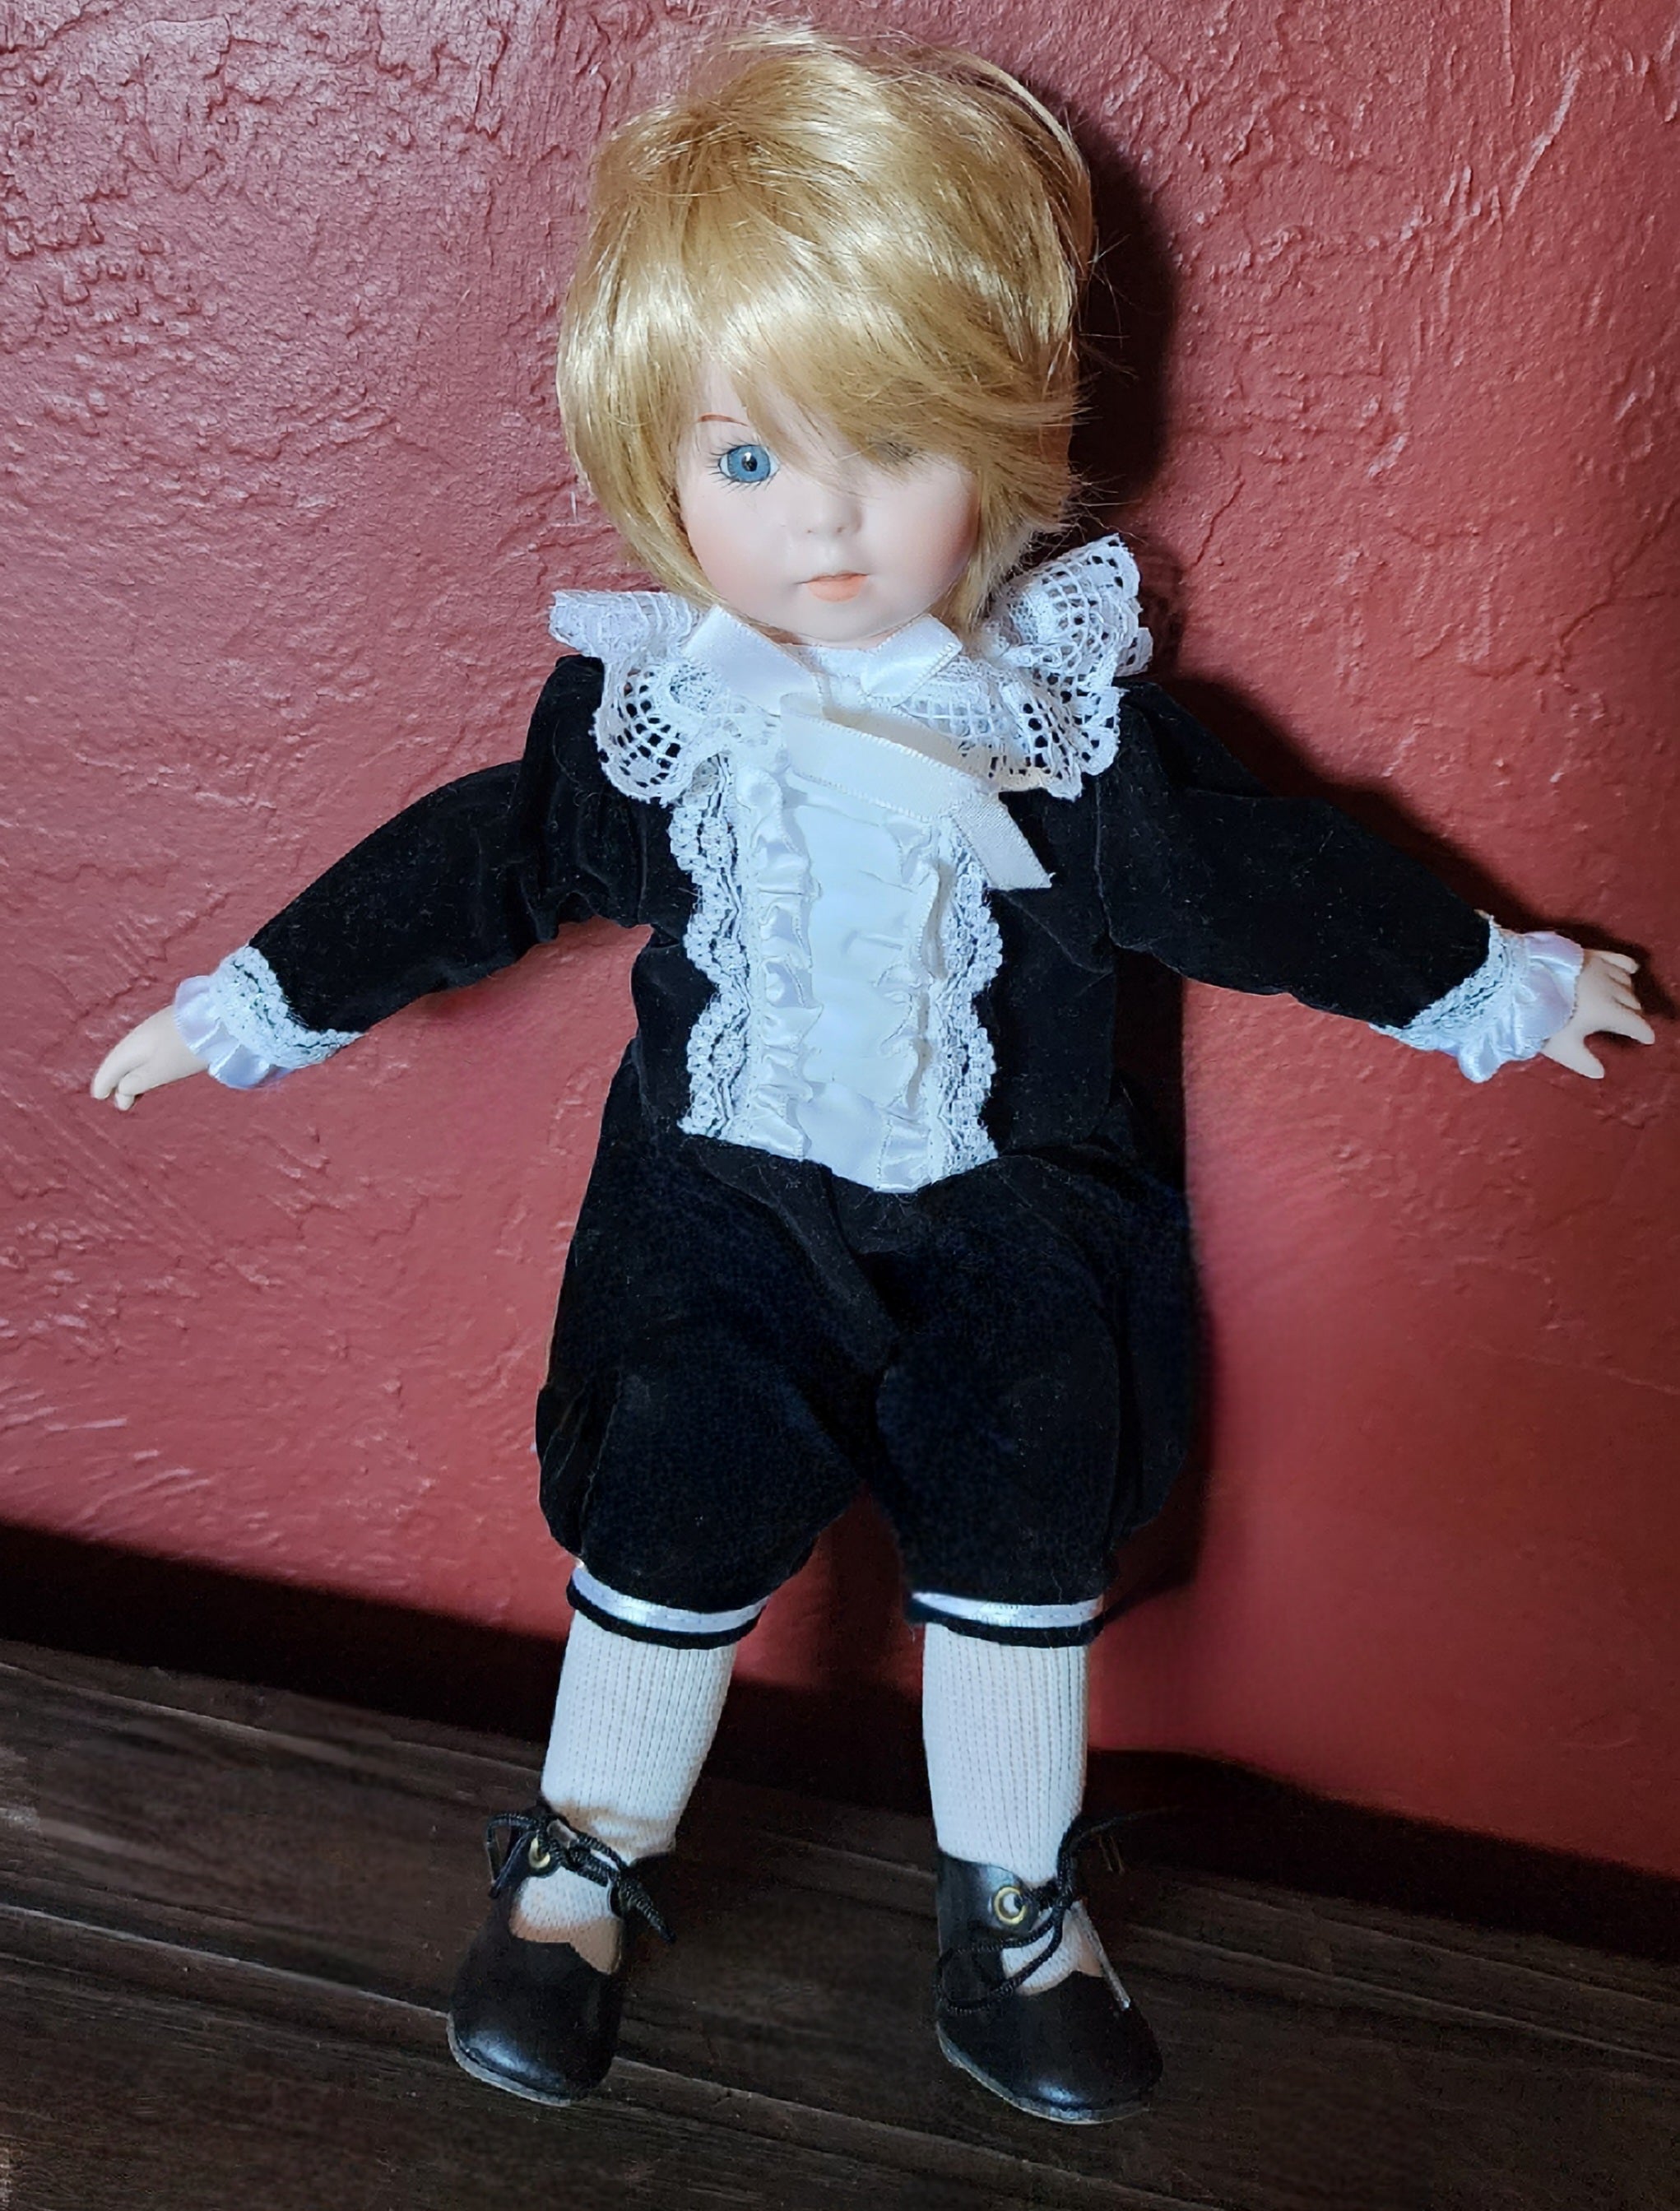 Ian the Mini Dr. Doolittle Spirit Boy! Child Spirited Doll or Remote Bridging